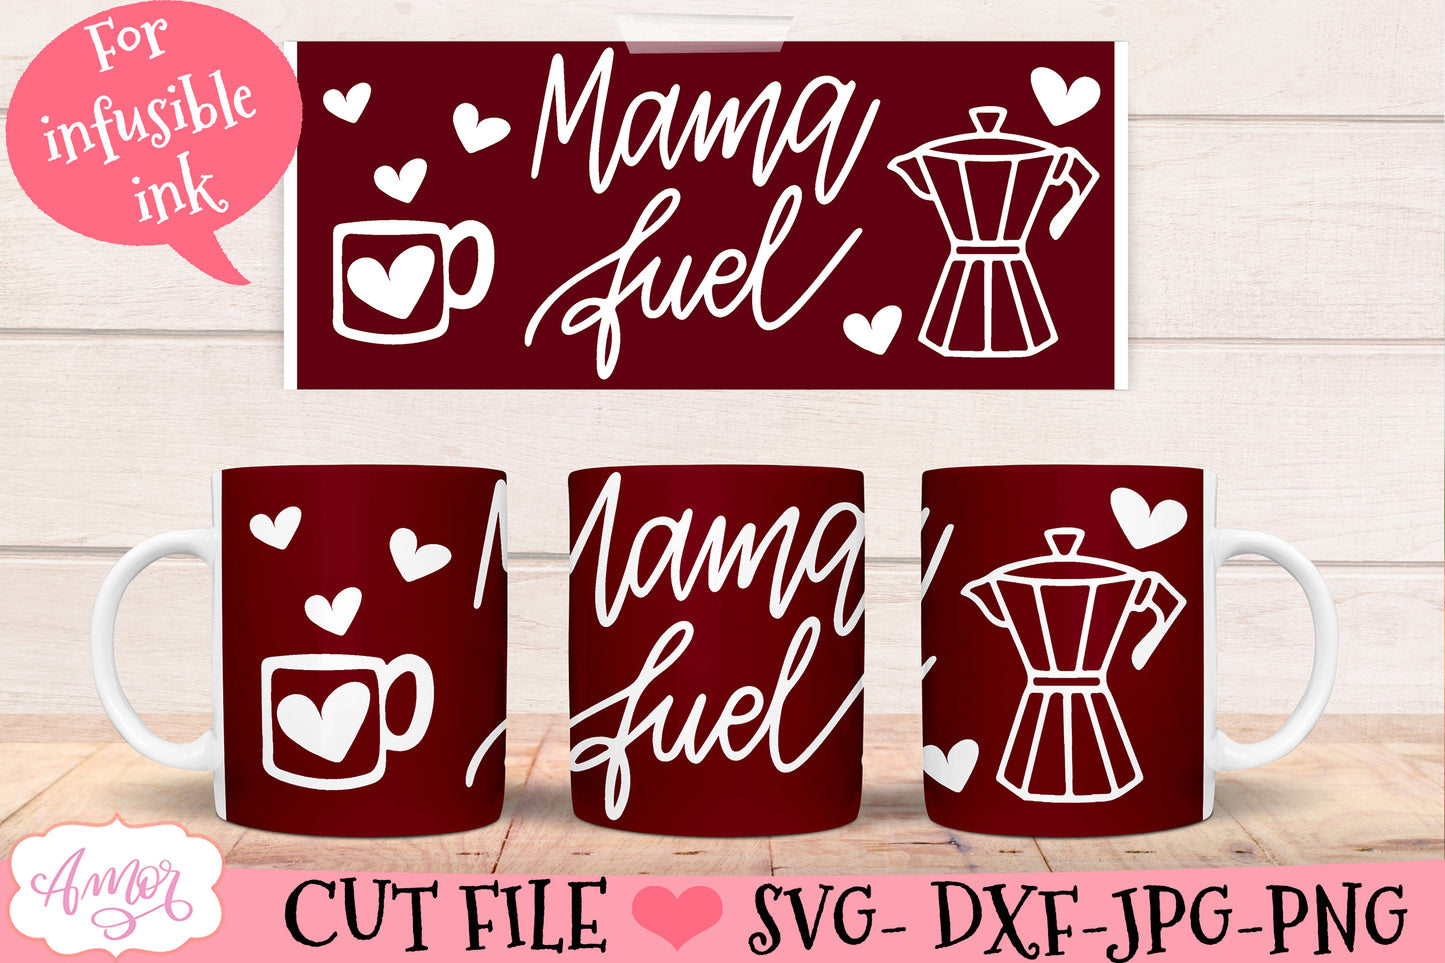 Mama fuel mug wrap SVG for infusible ink- 12oz Cricut